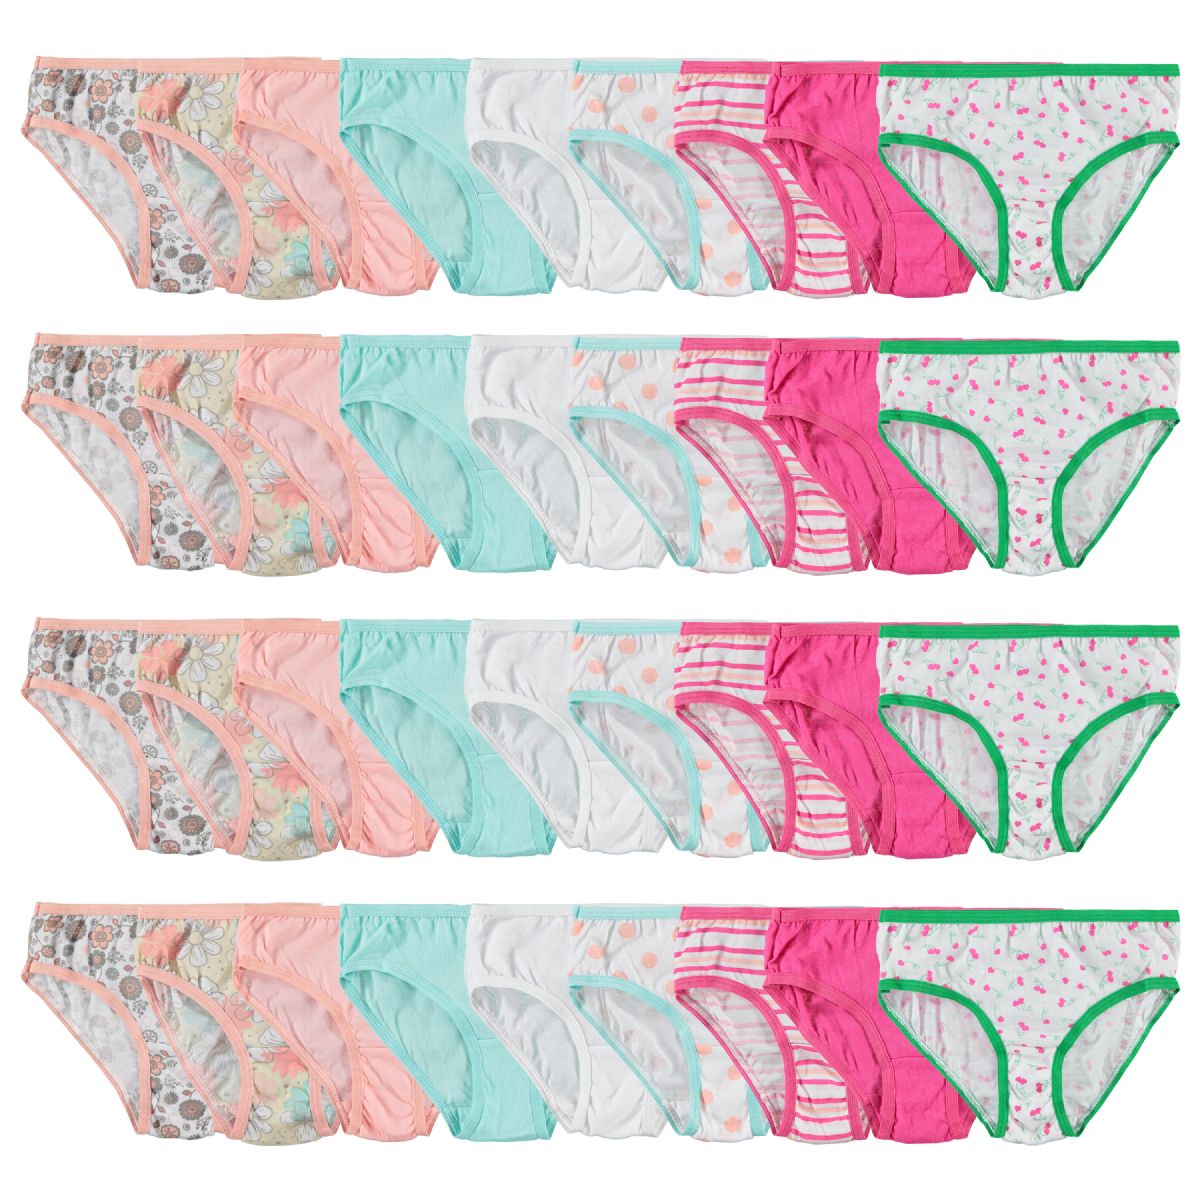 72 Wholesale Girls Cotton Blend Assorted Printed Underwear Size 2